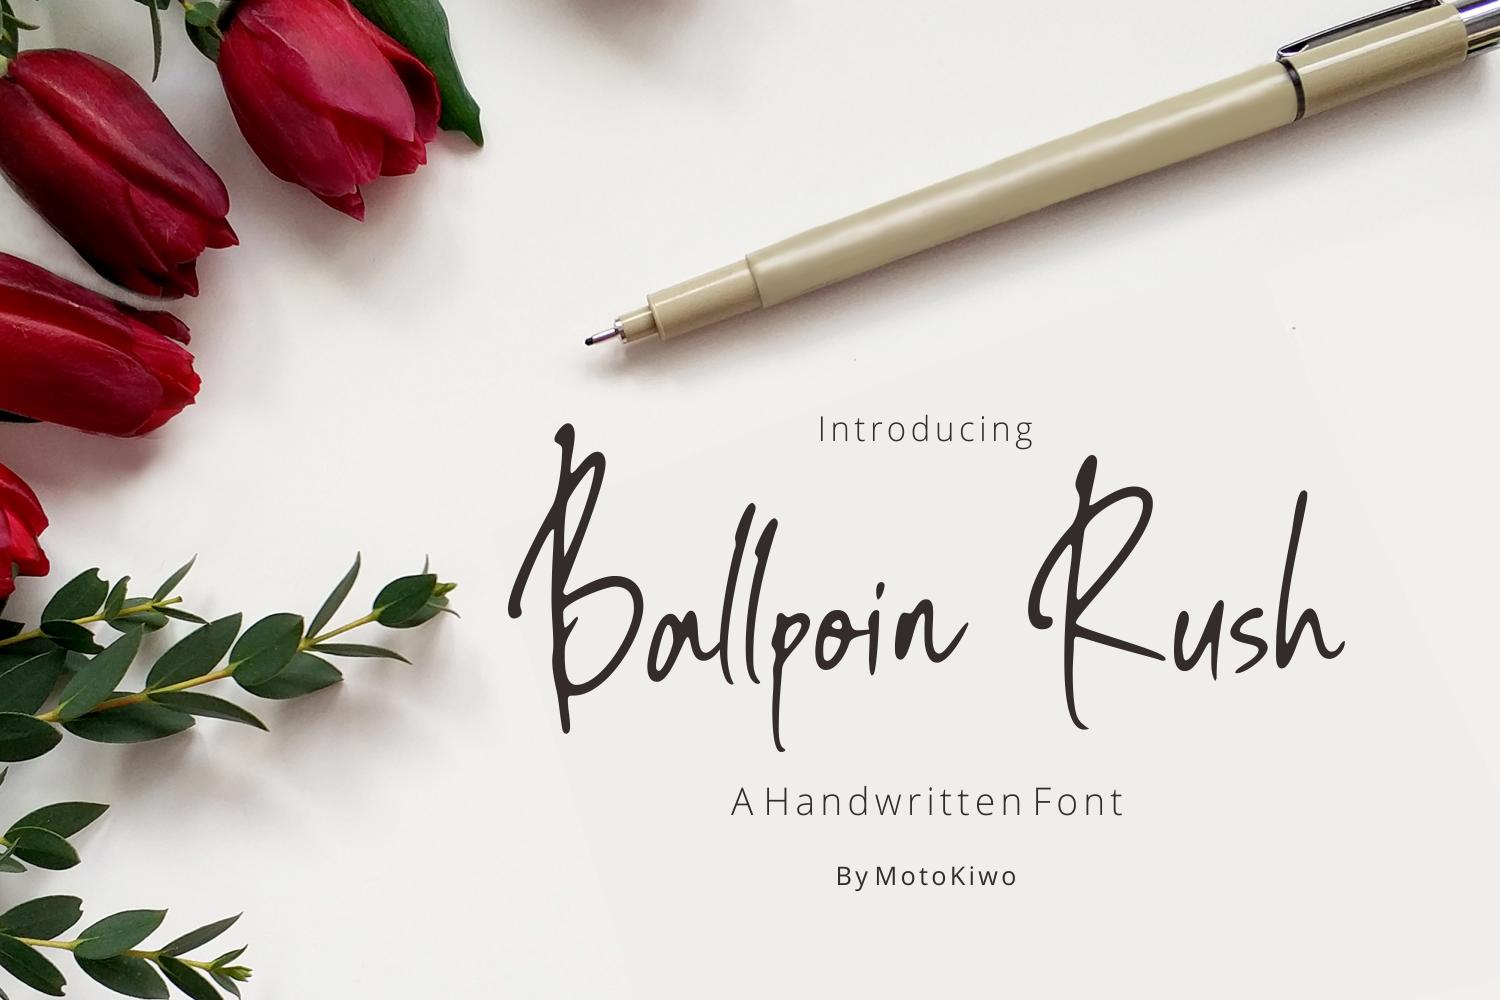 Ballpoin Rush Font